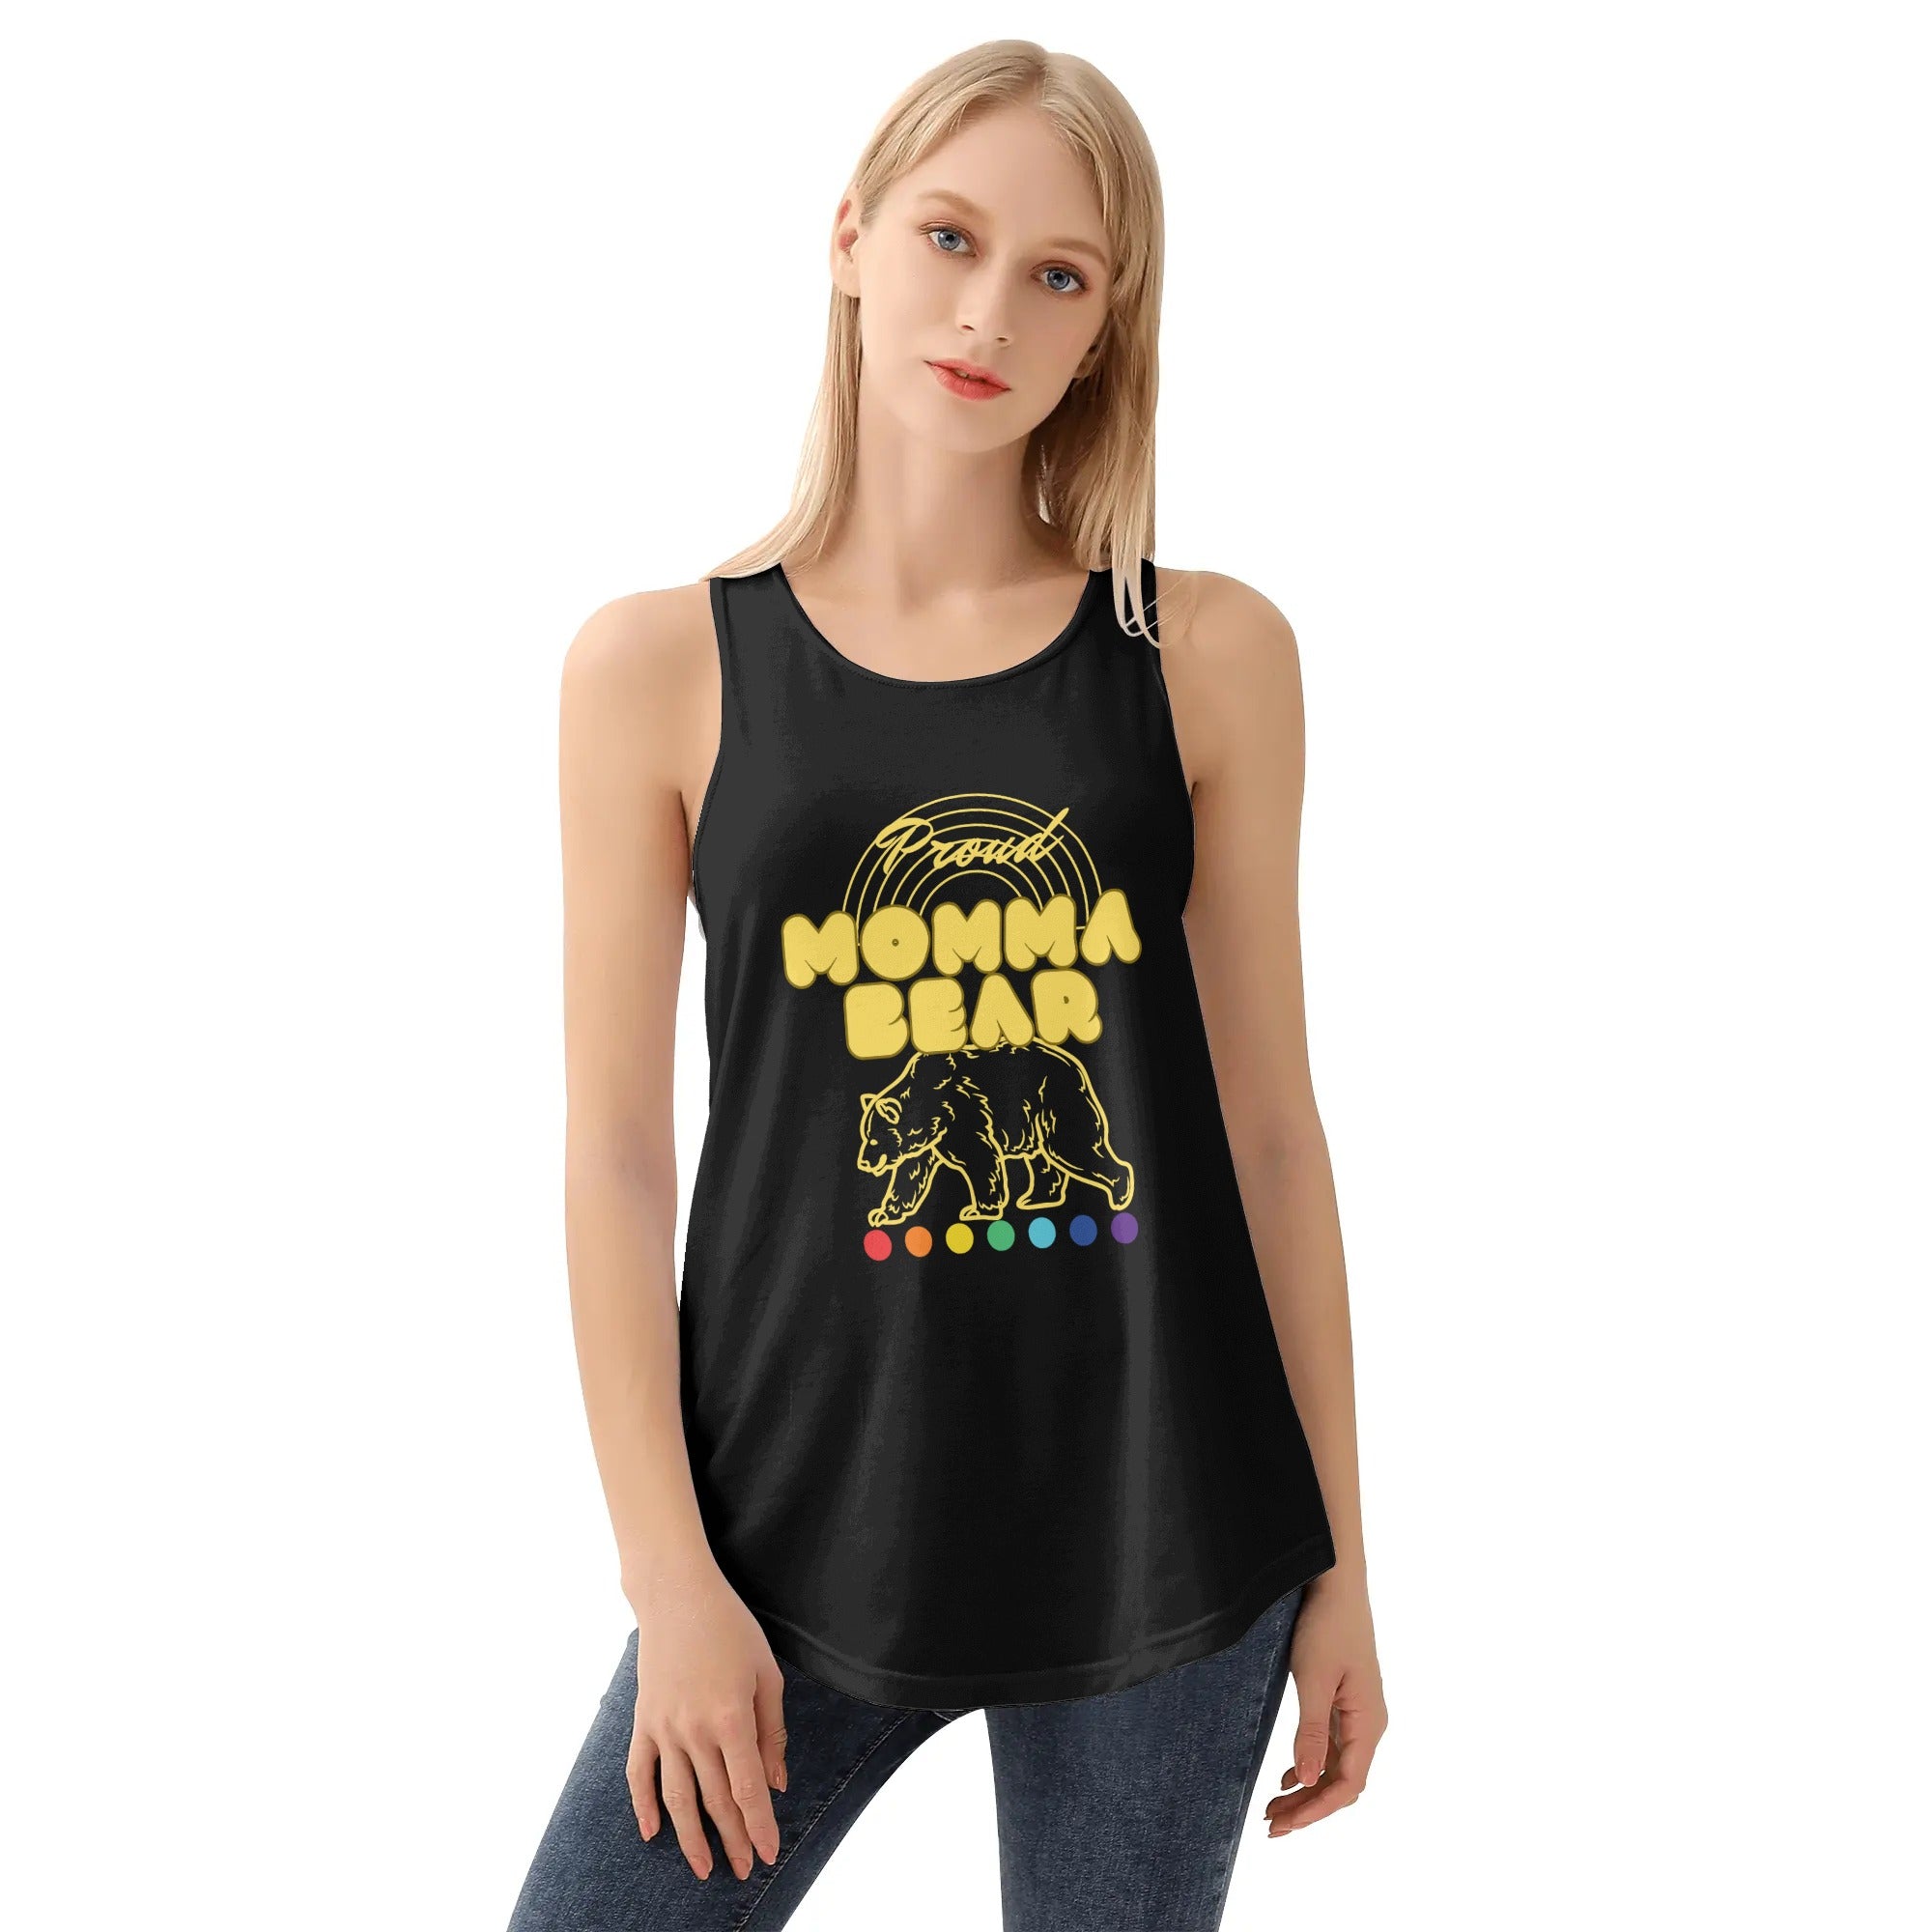 Proud Mama Bear Women's Tank Top - Rose Gold Co. Shop